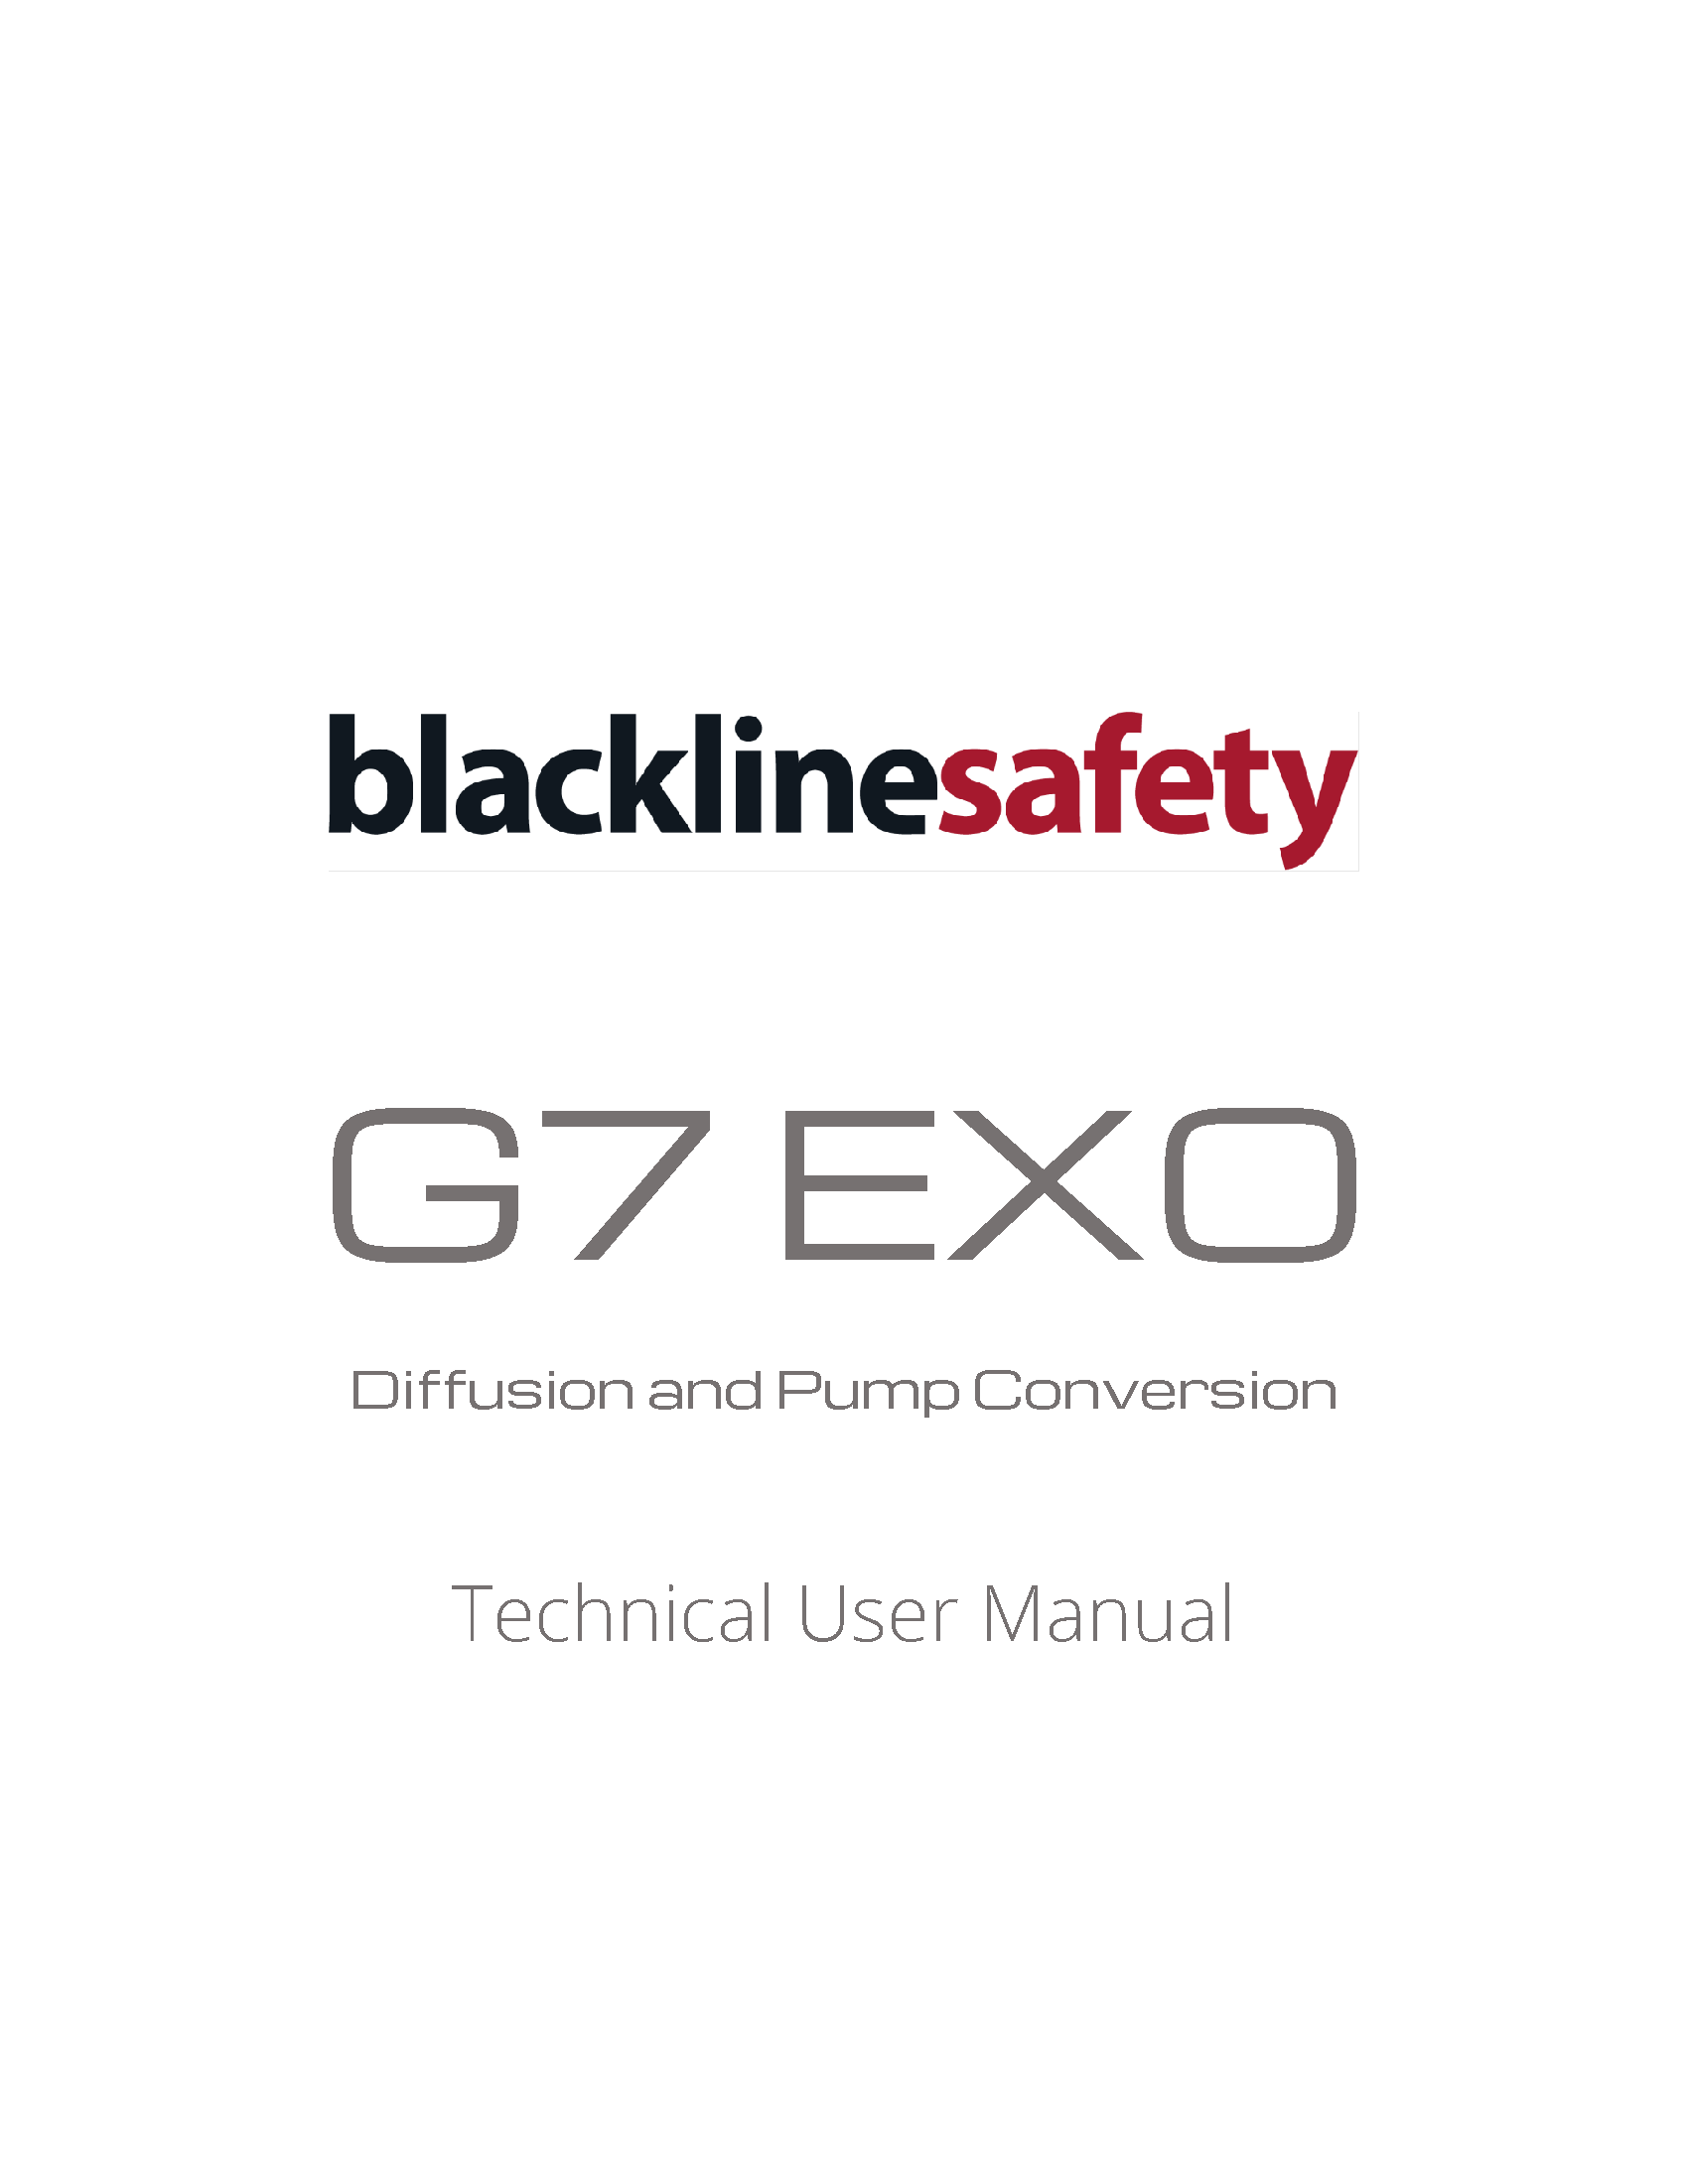 G7 EXO Bomba y Difusión Conversión Cubierta Manual Técnico Usuario